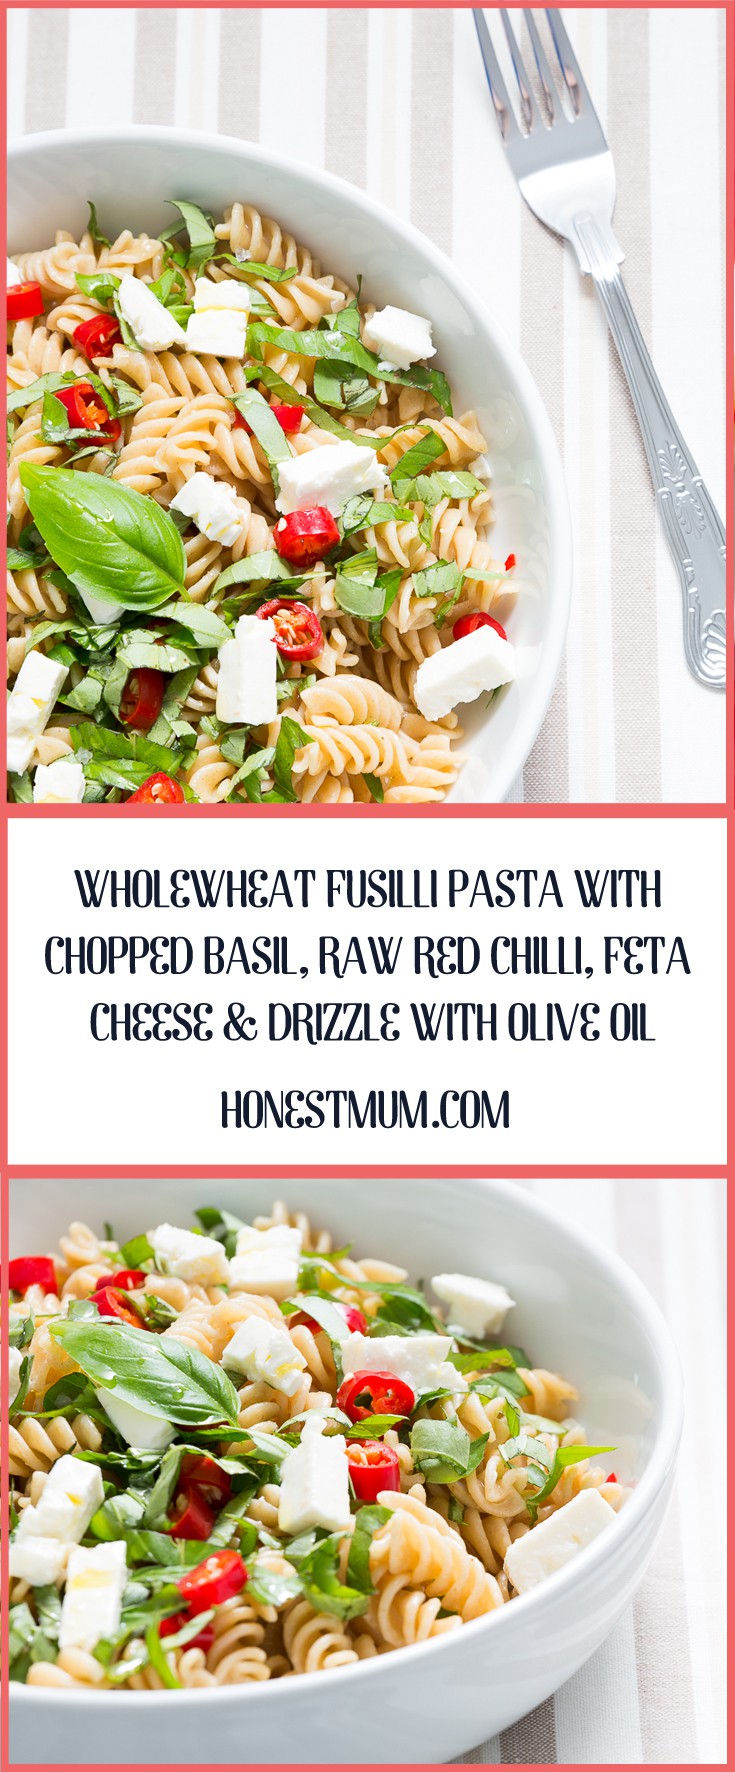 Wholewheat Fusilli Pasta With Basil, Chilli & Feta